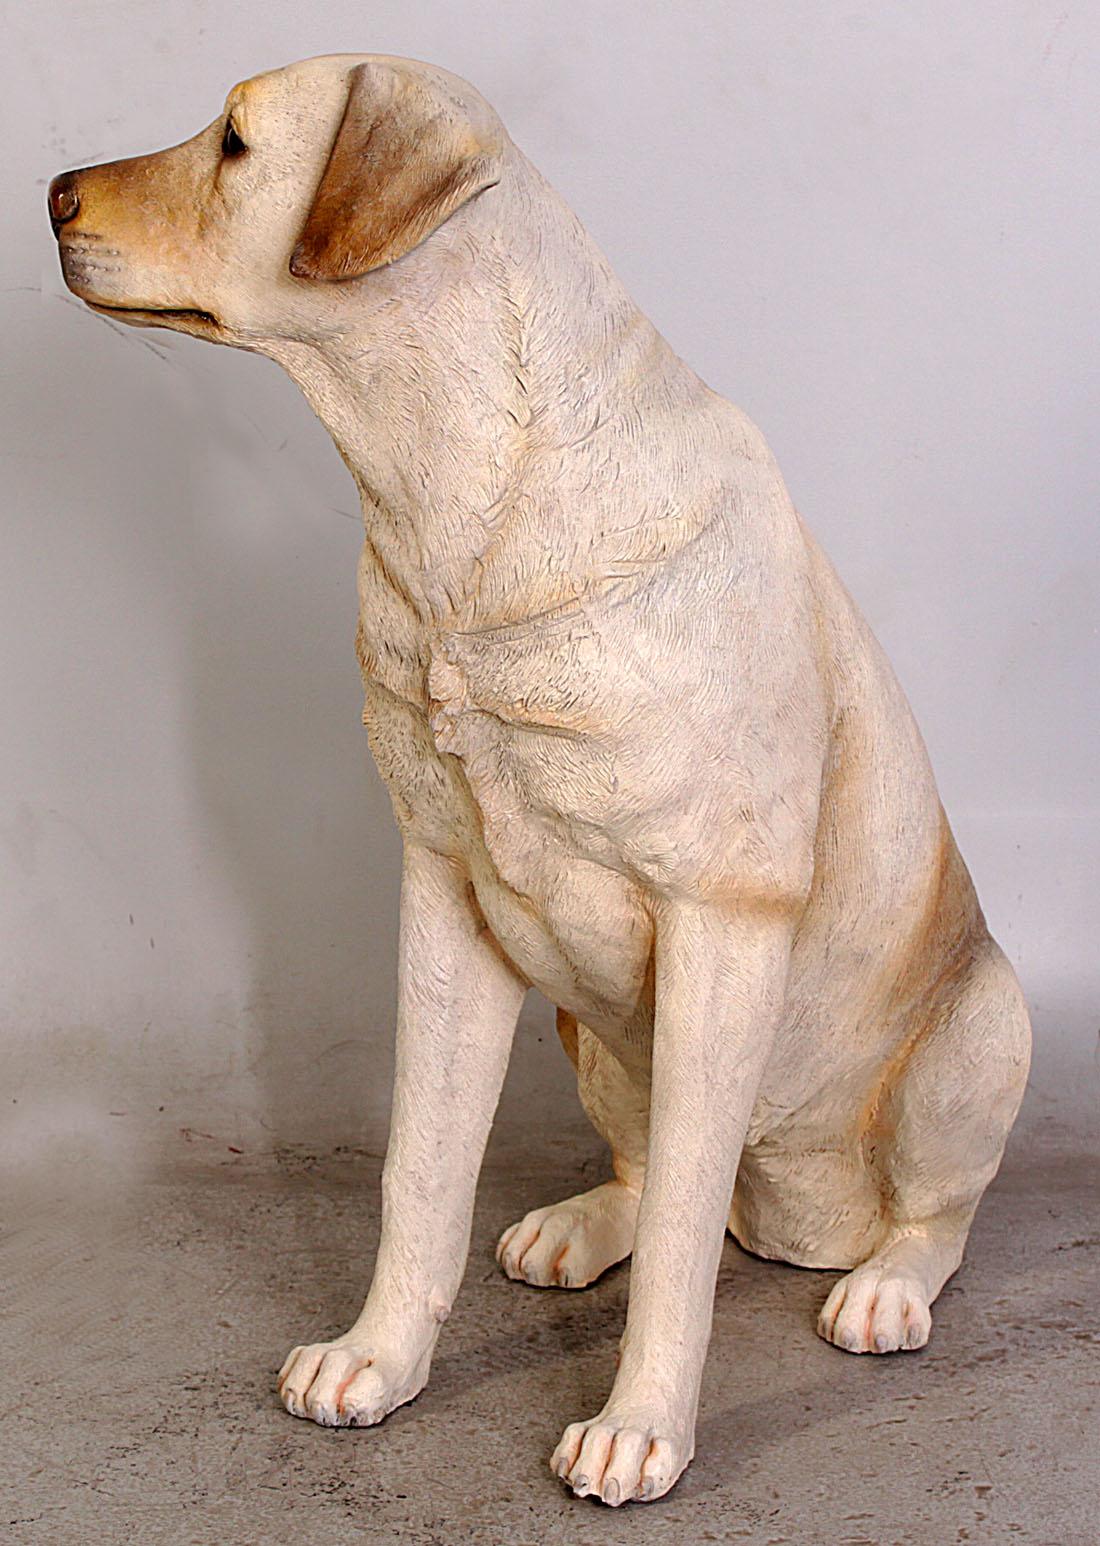 Dog Labrador Sitting Tan Life Size Statue